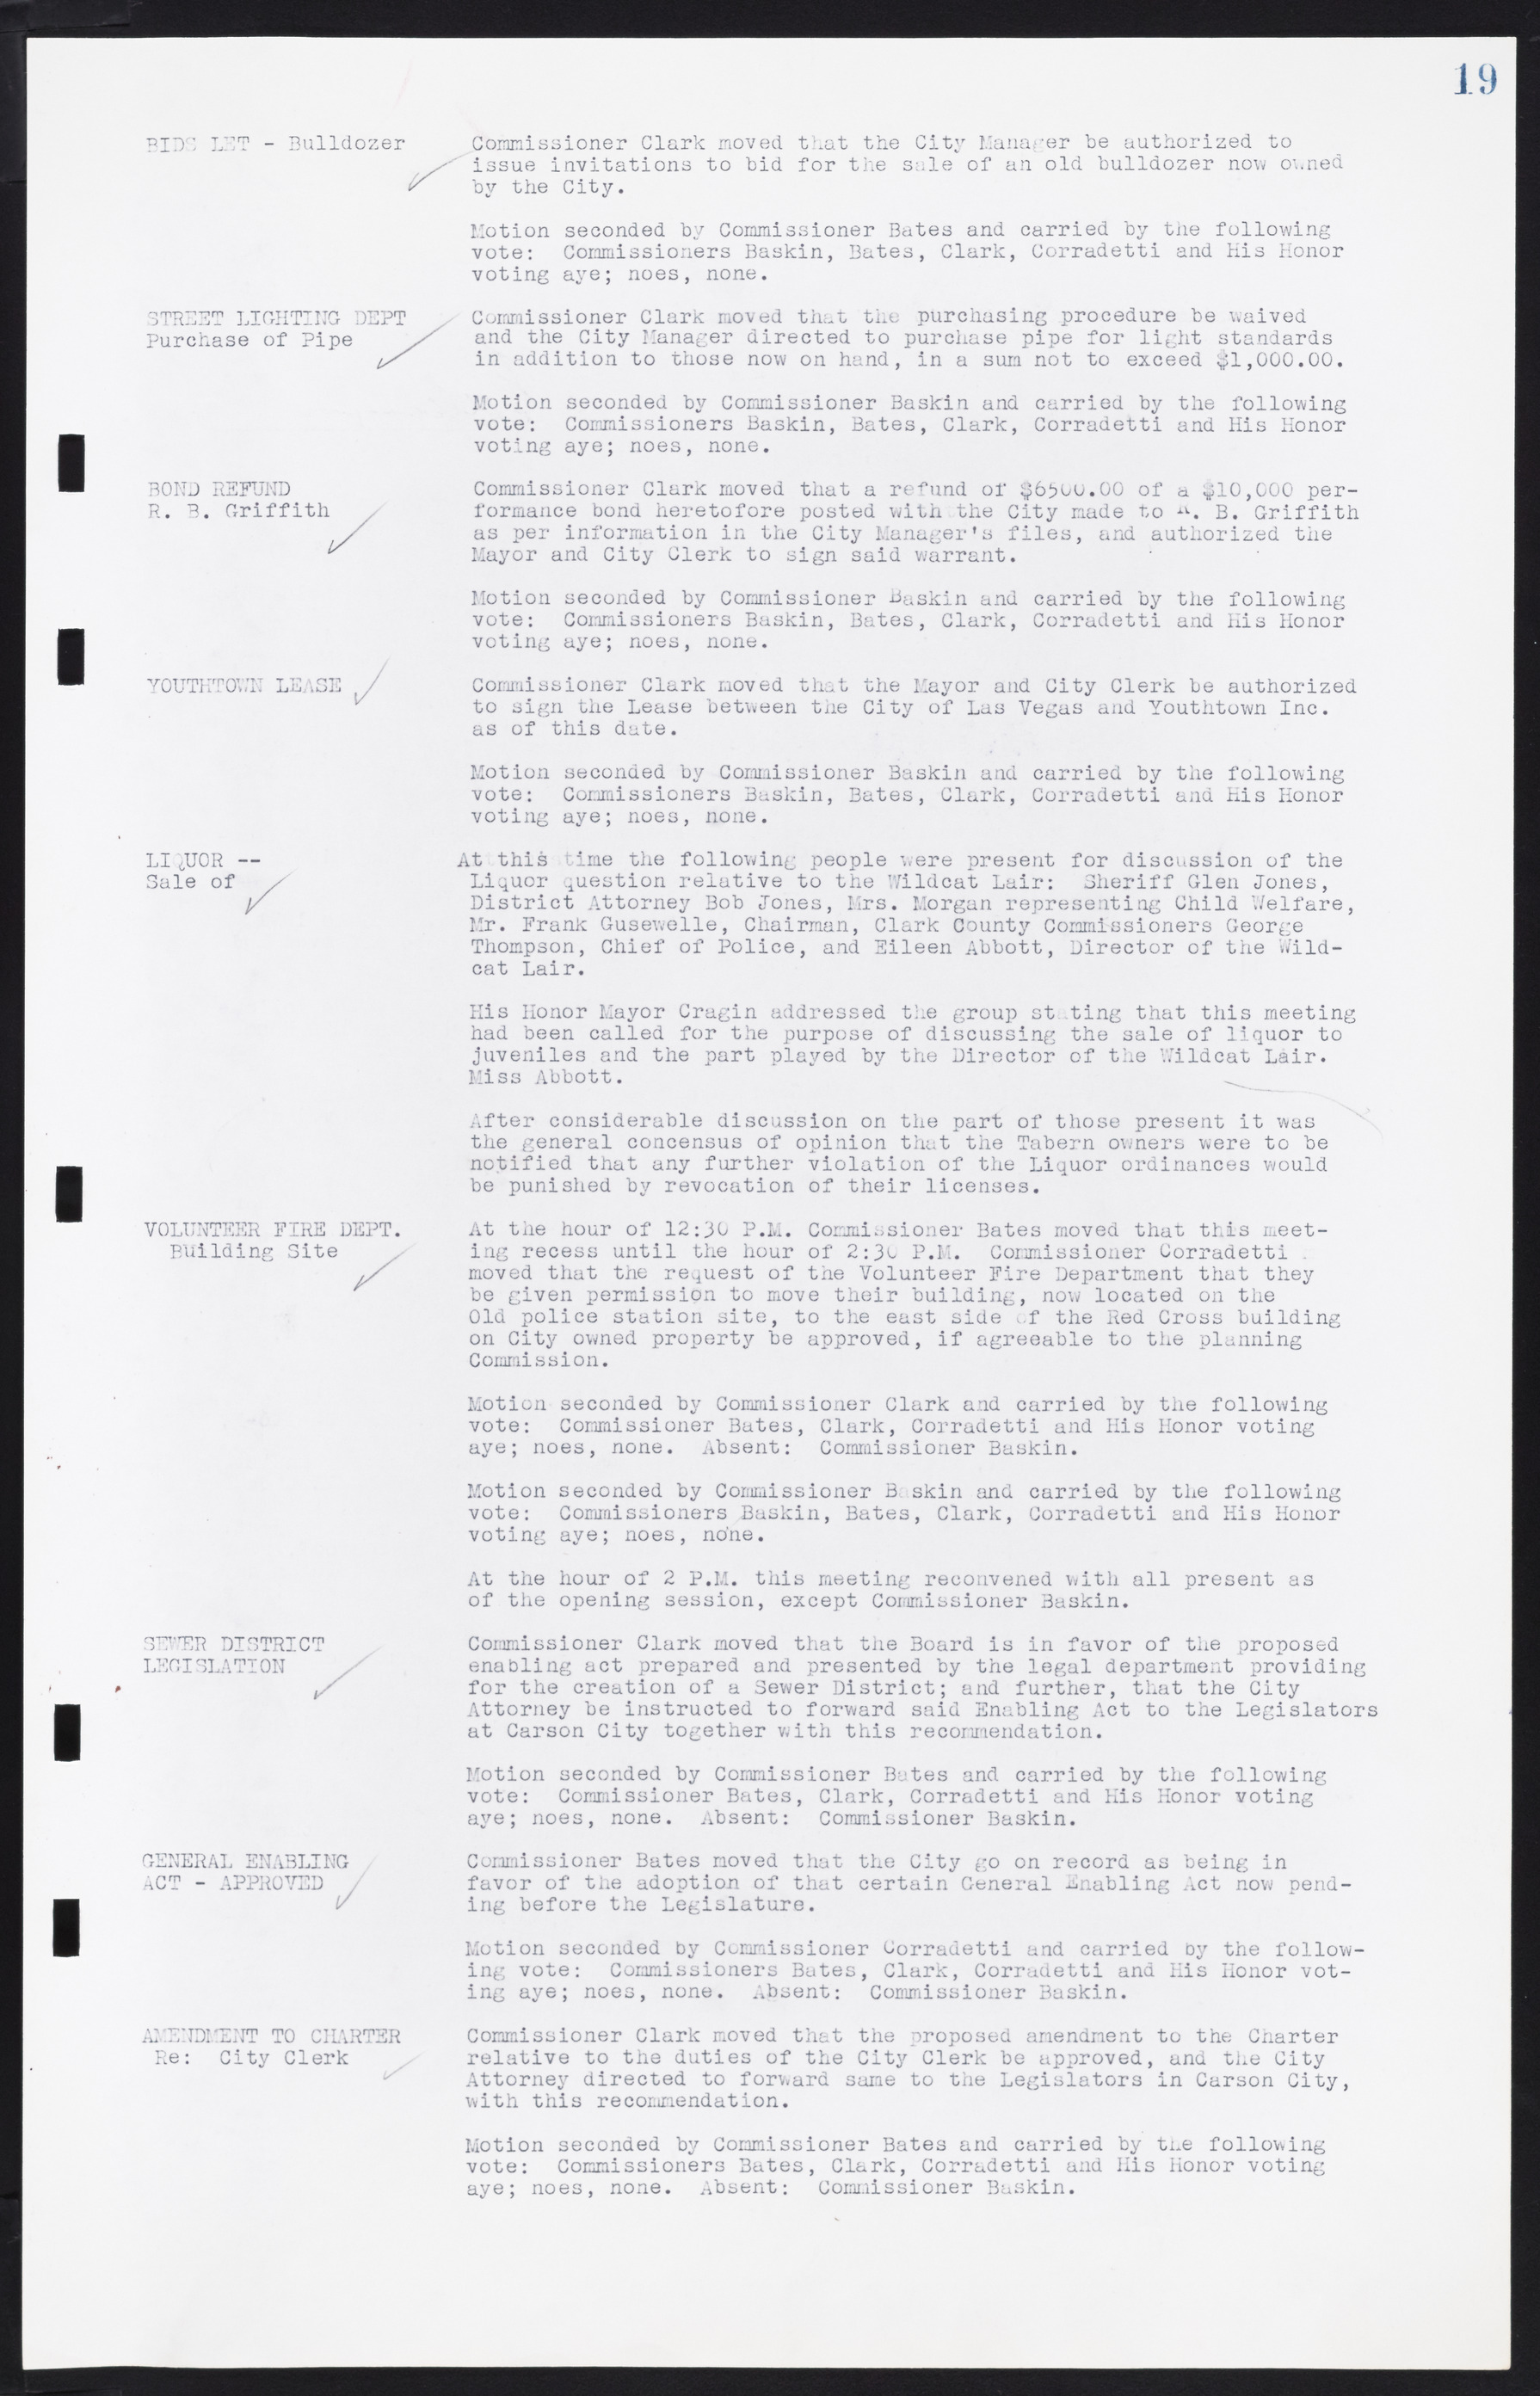 Las Vegas City Commission Minutes, January 7, 1947 to October 26, 1949, lvc000006-27